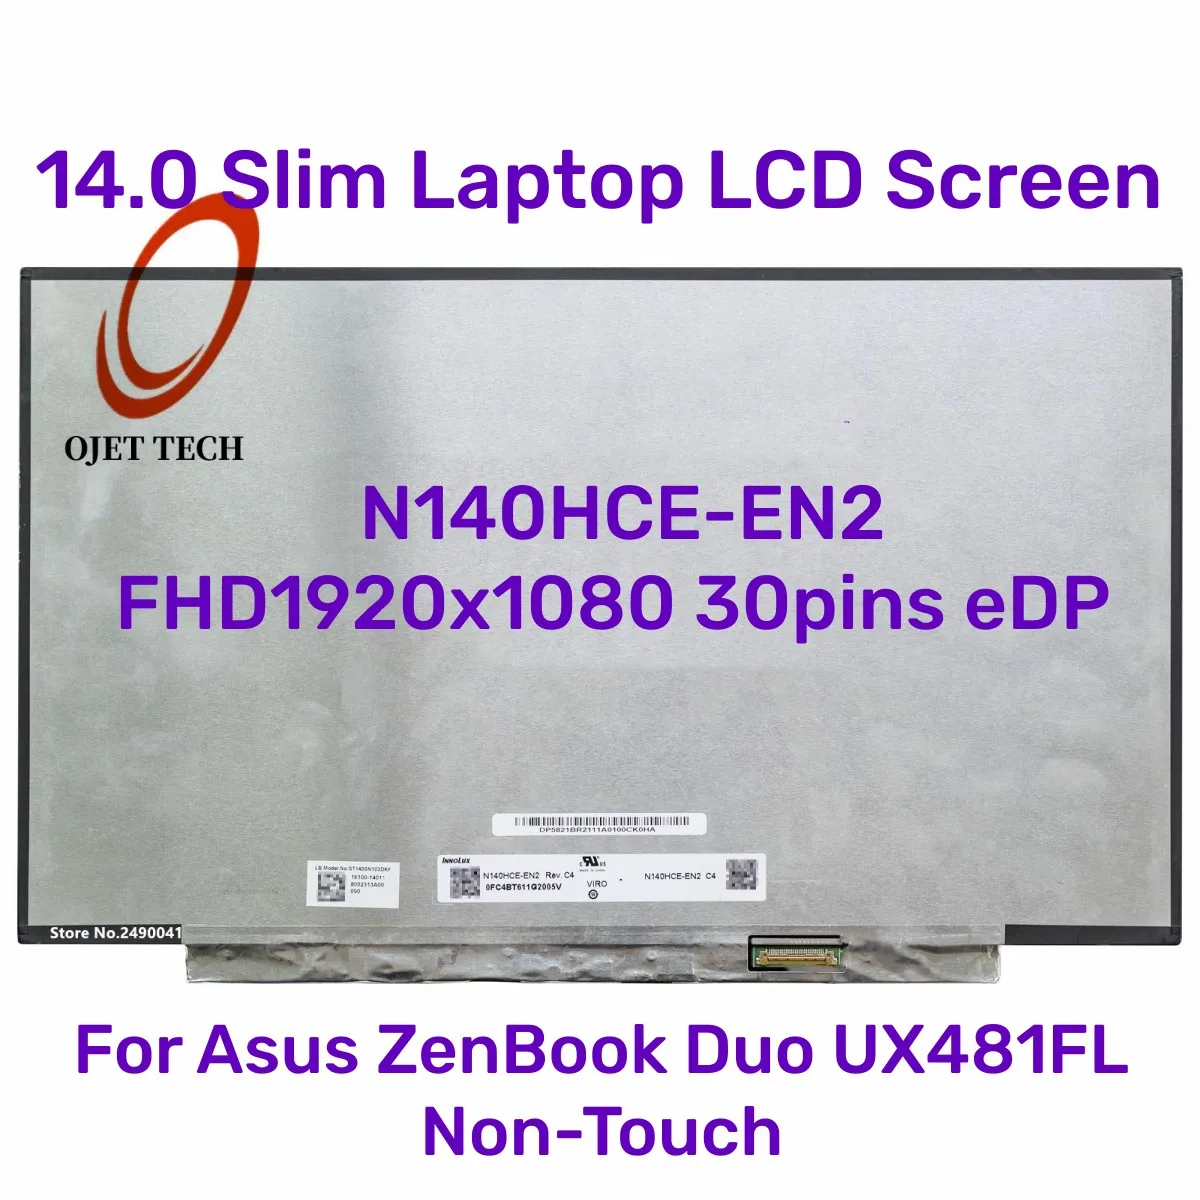 

14.0 Slim Laptop LCD Screen N140HCE-EN2 for Asus ZenBook Duo UX481FL 100% sRGB IPS Display Panel FHD1920x1080 30pins eDP